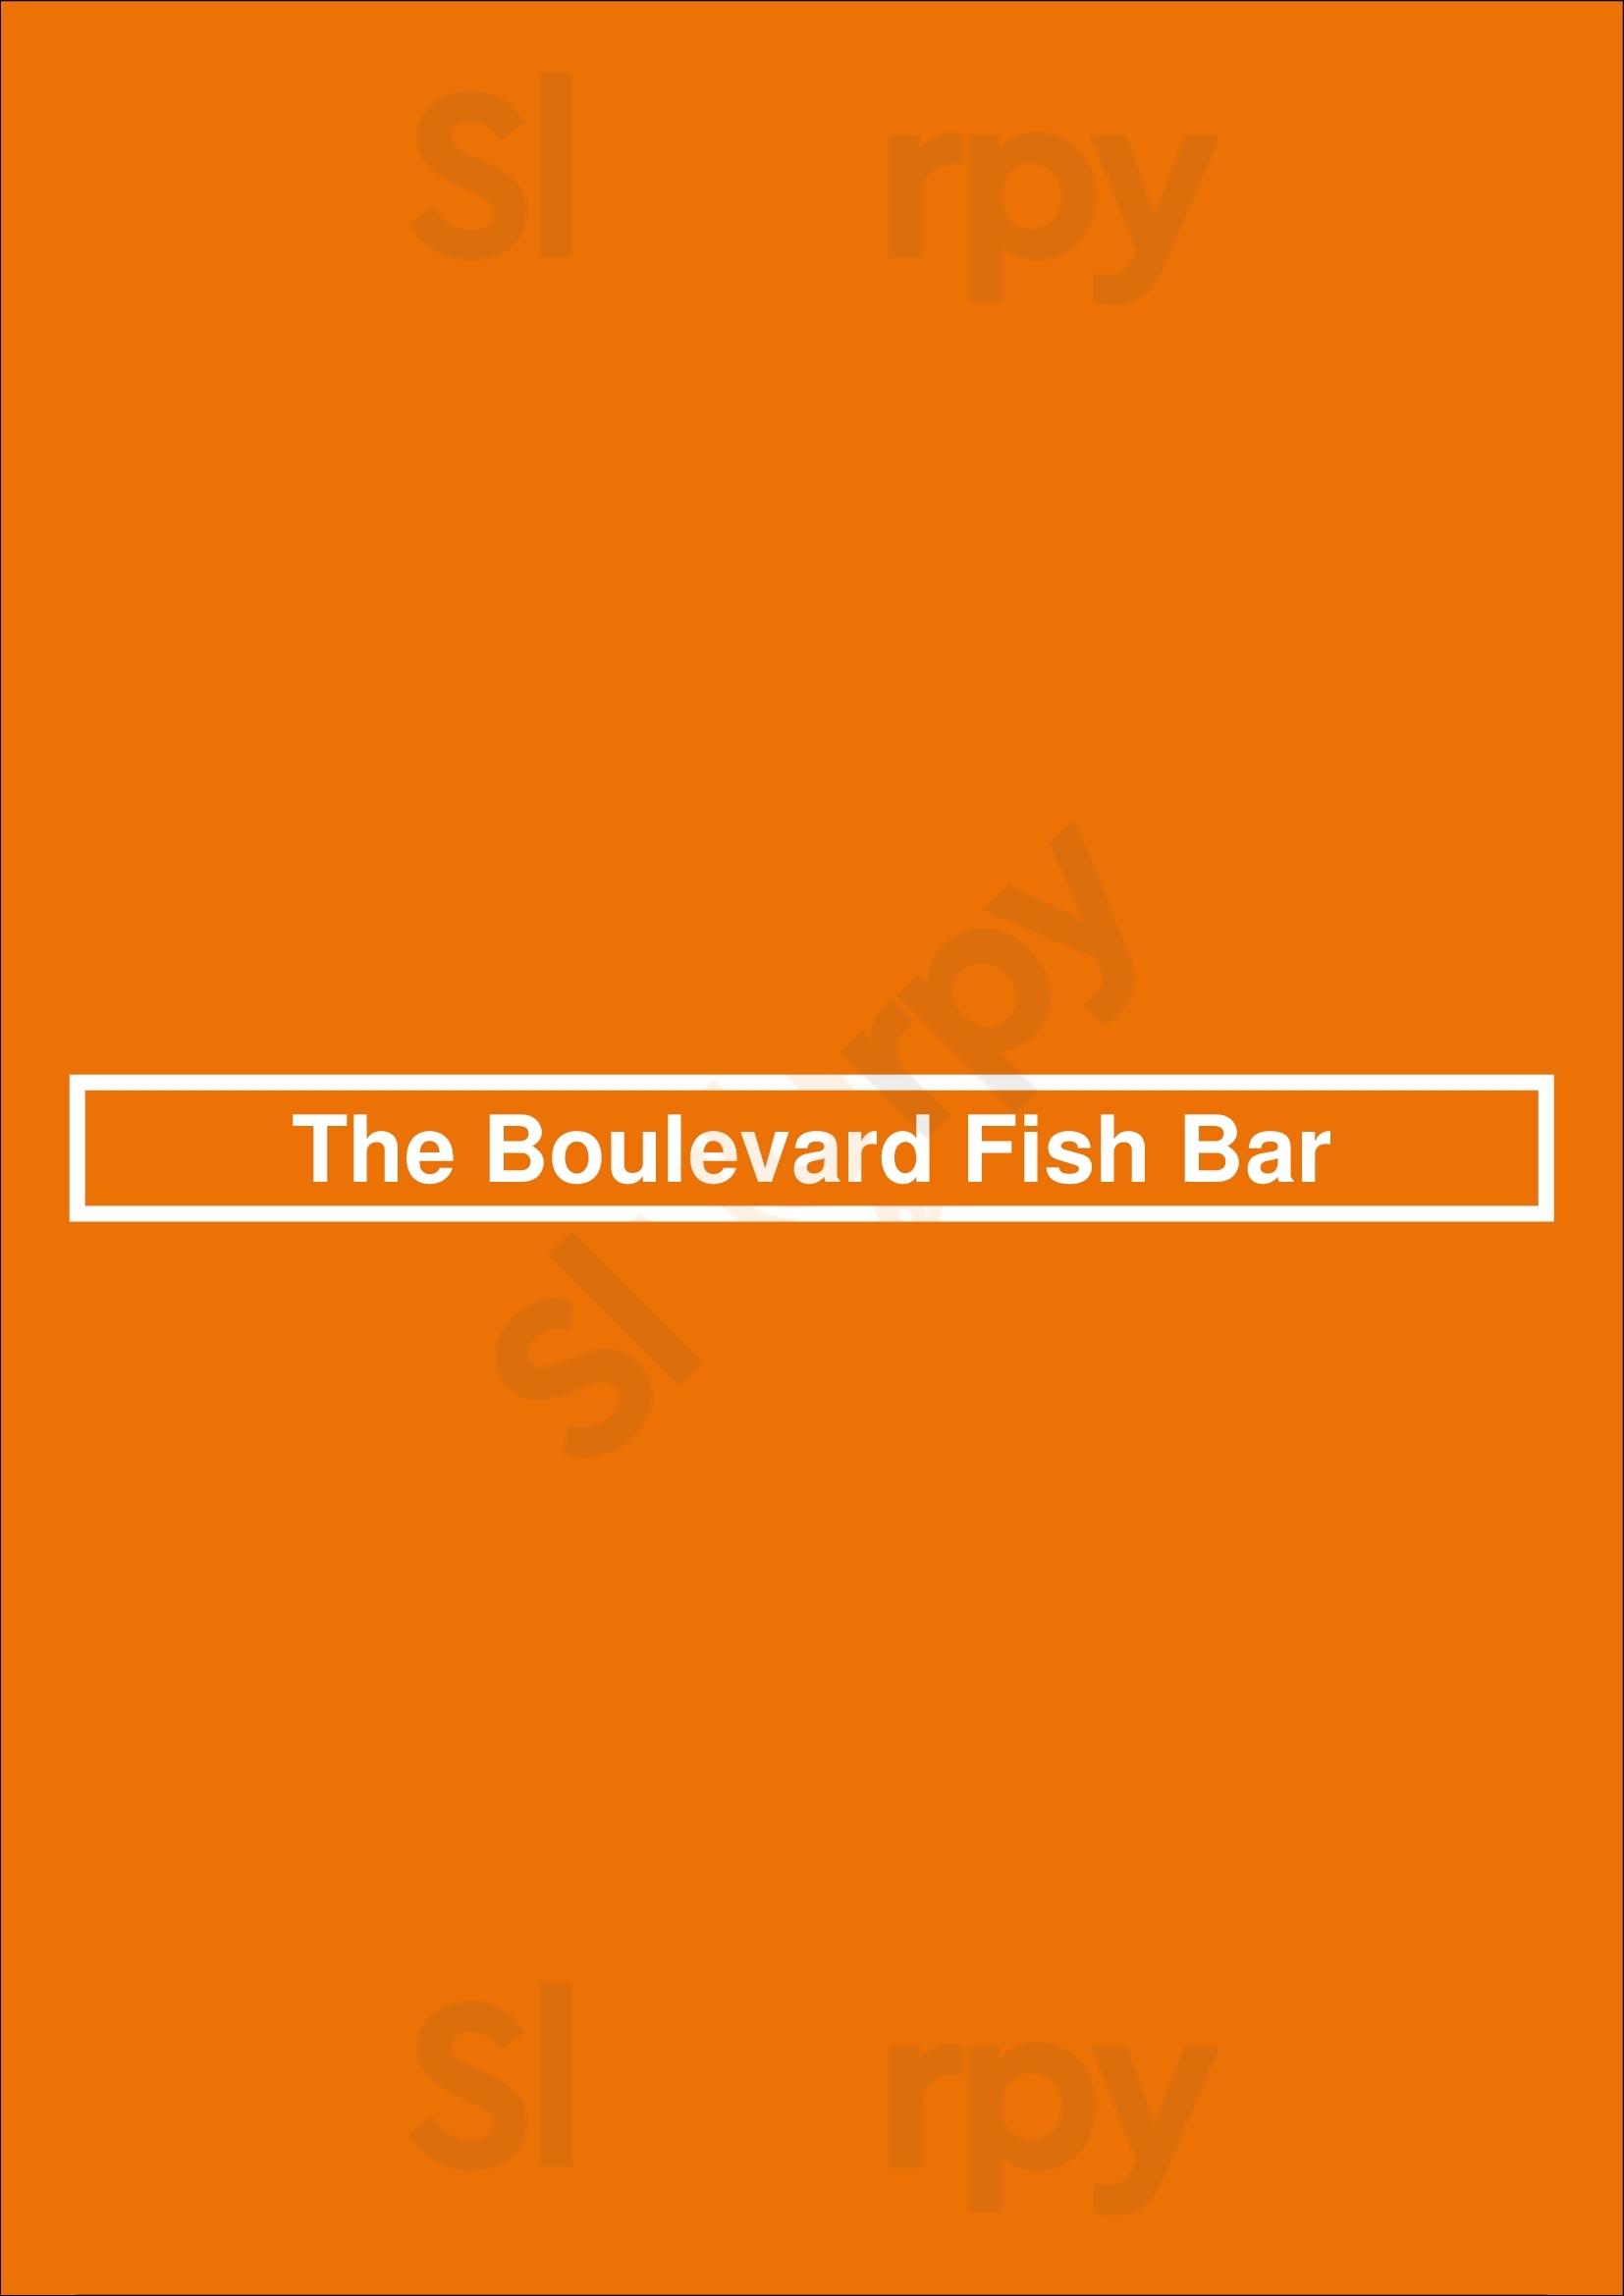 Boulevard Fish Bar Glasgow Menu - 1